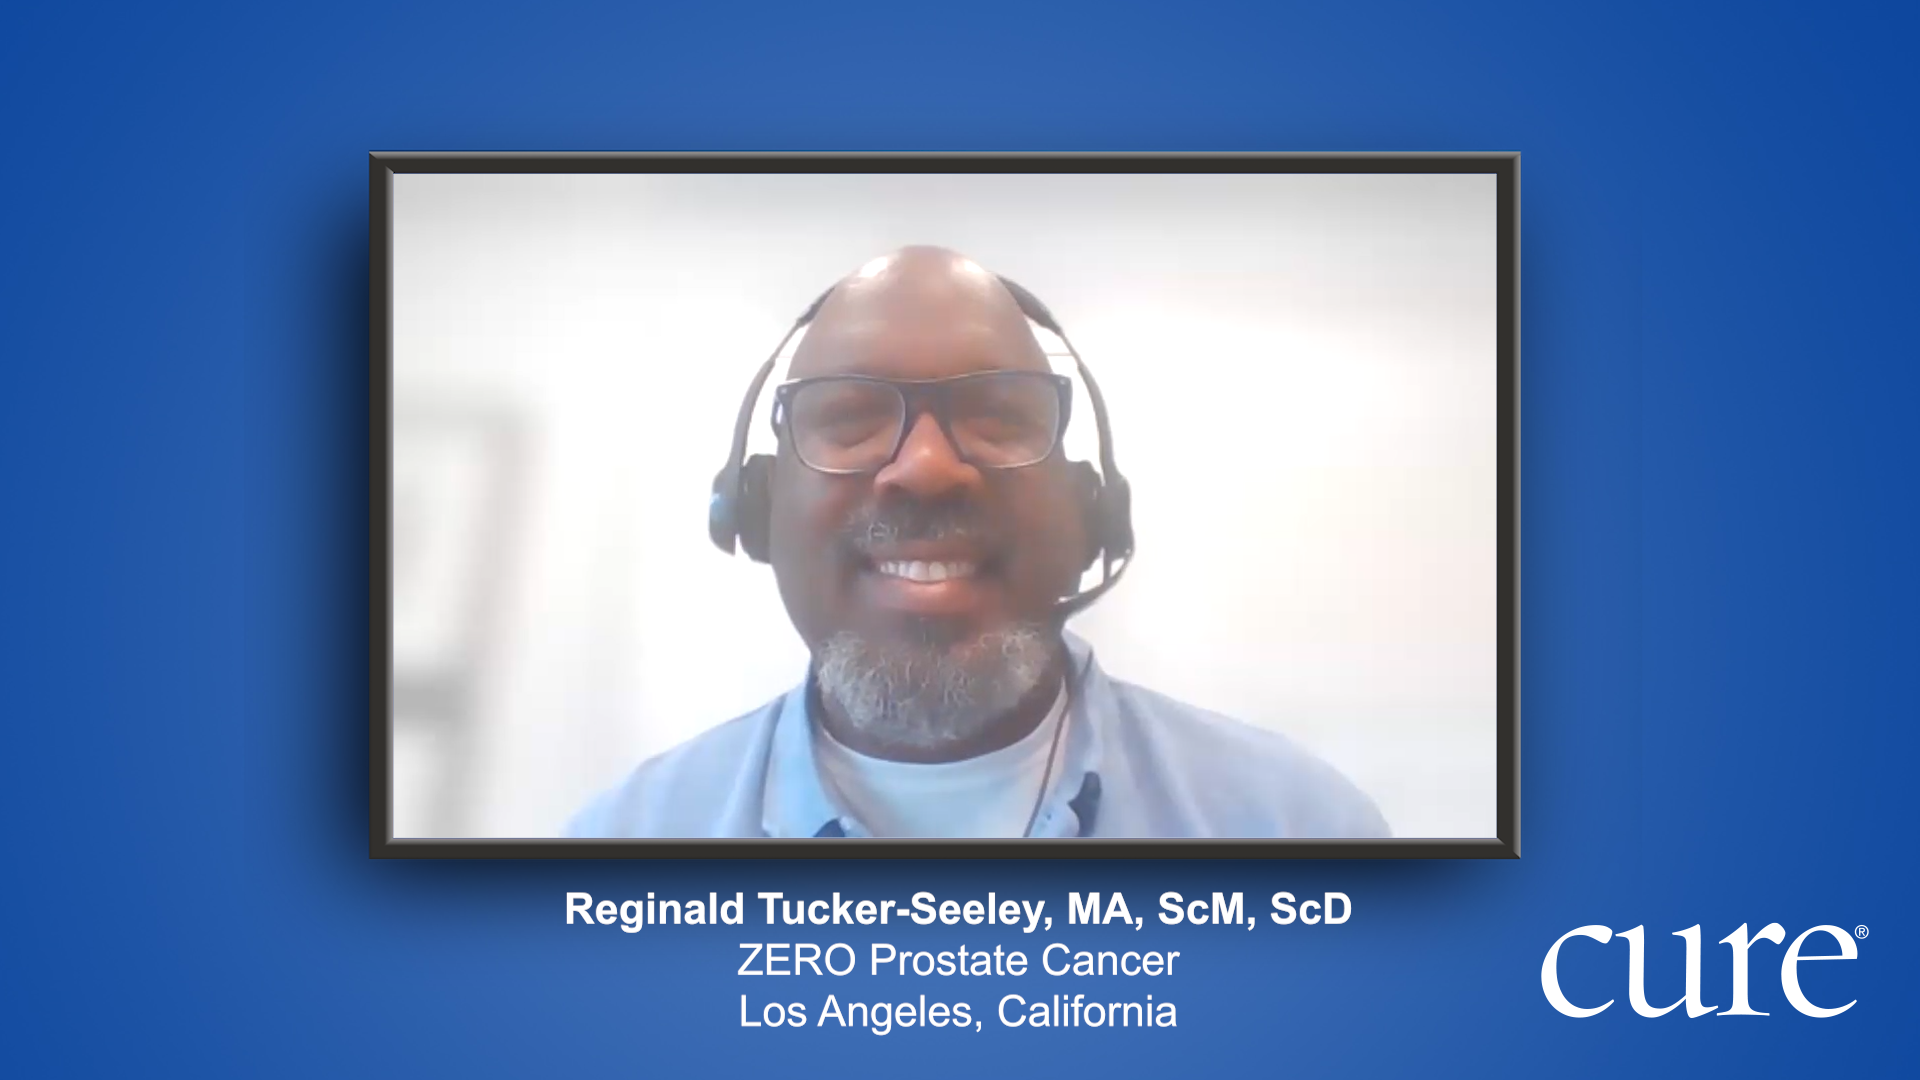 Reginald Tucker-Seeley, MA, ScM, ScD, an expert on prostate cancer